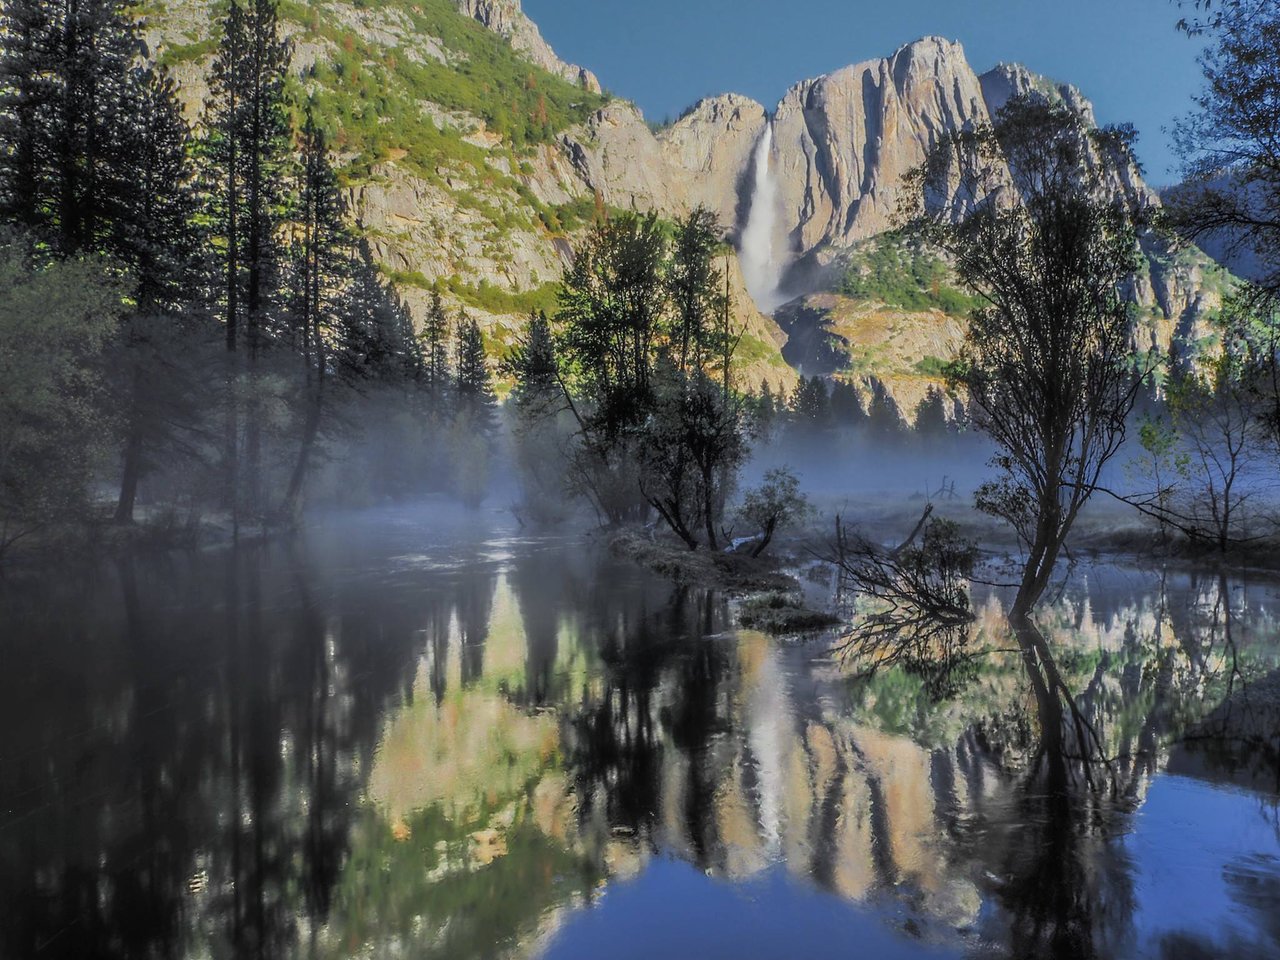 The Redwoods in Yosemite